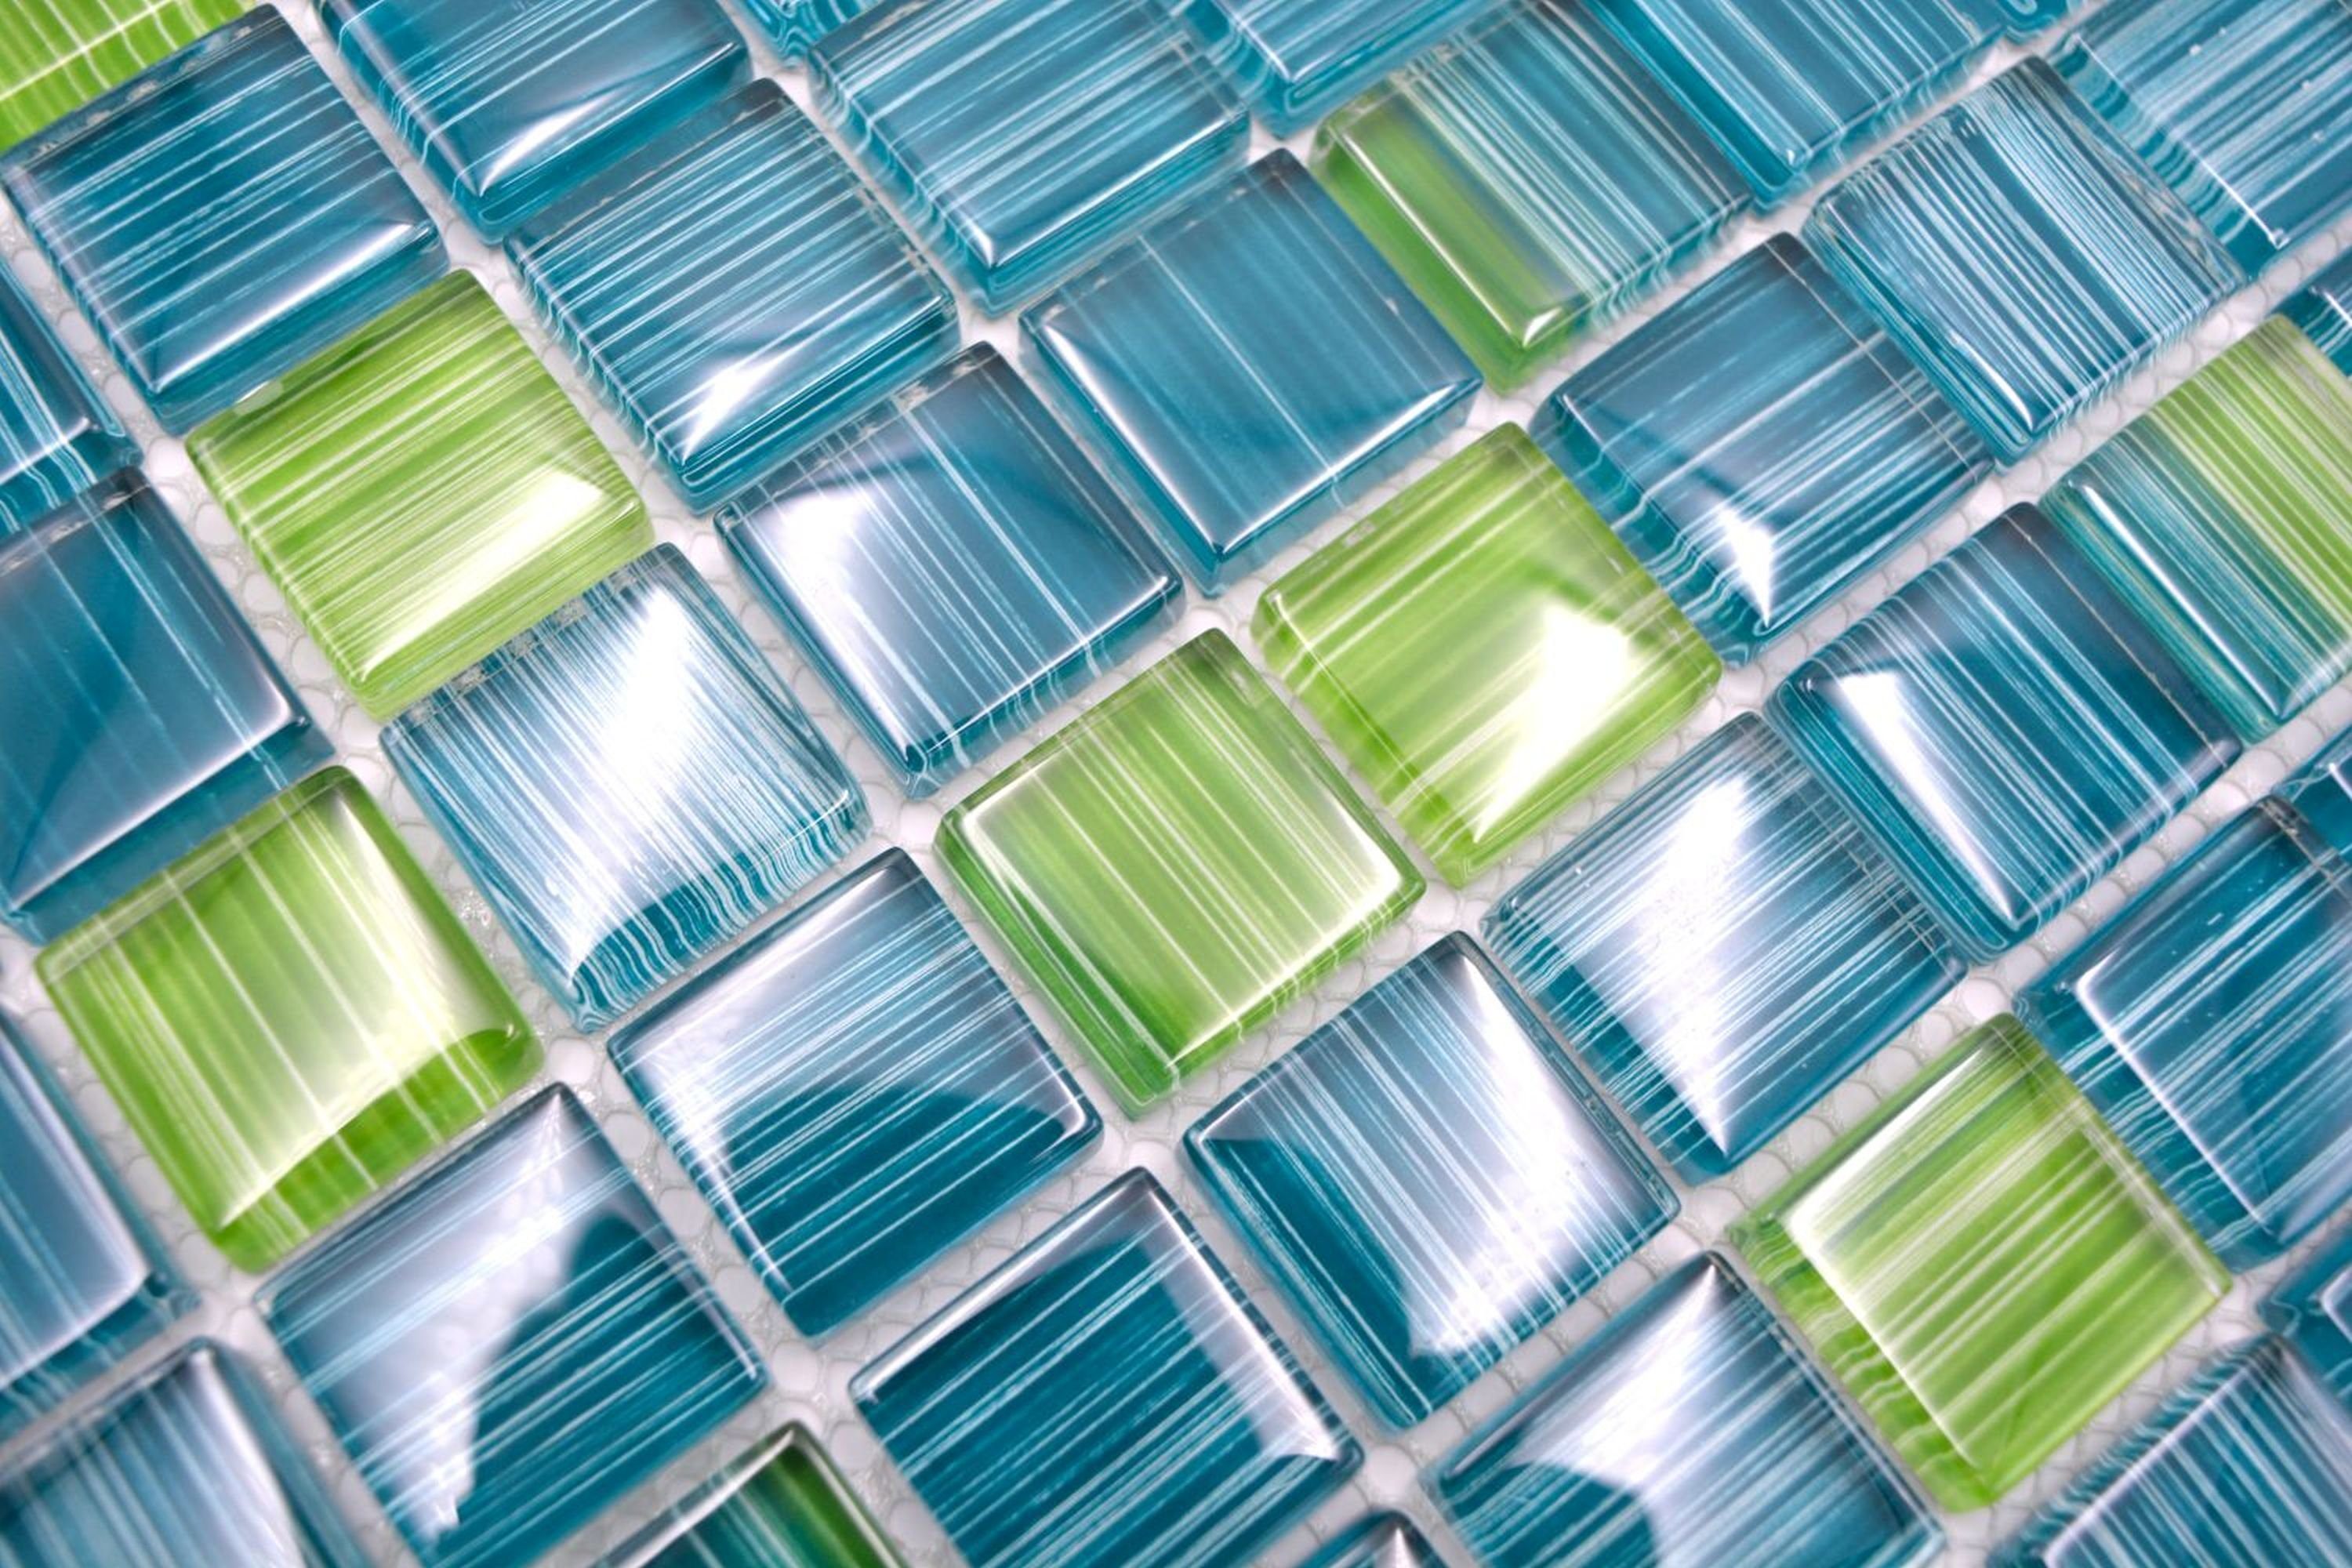 grün Mosaikfliesen türkis Mosaikfliese Glasmosaik Küche Style Flaschen kiwi Mosani